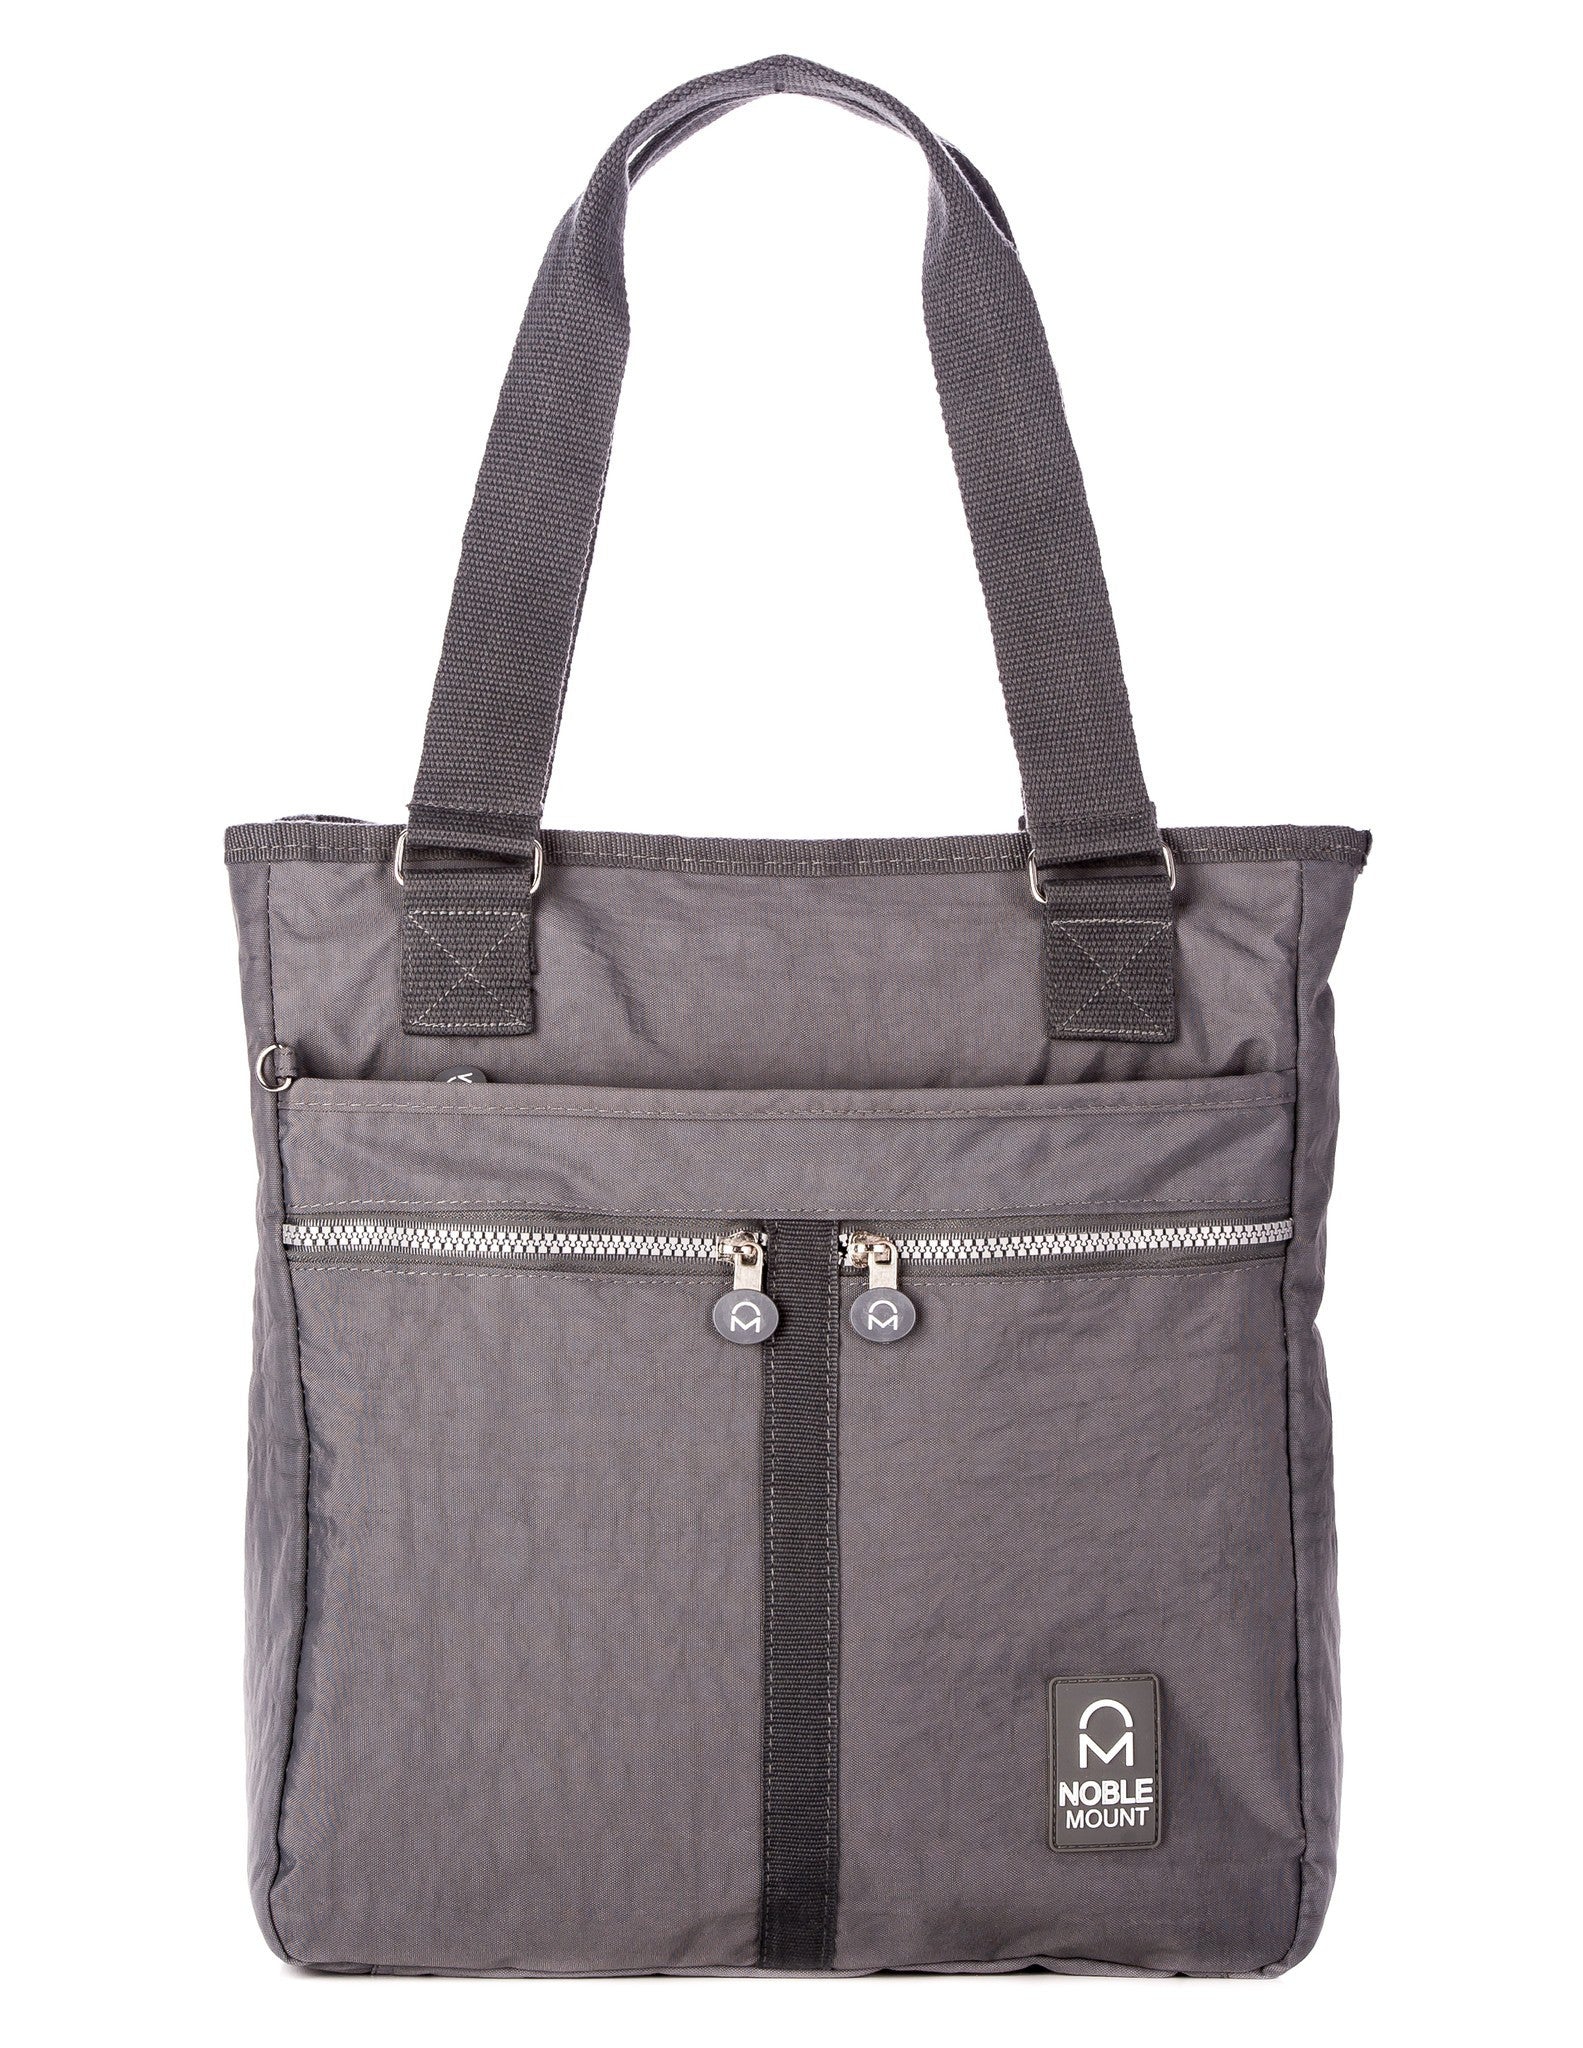 Crinkle Nylon ‘Everyday Companion' Tote Bag